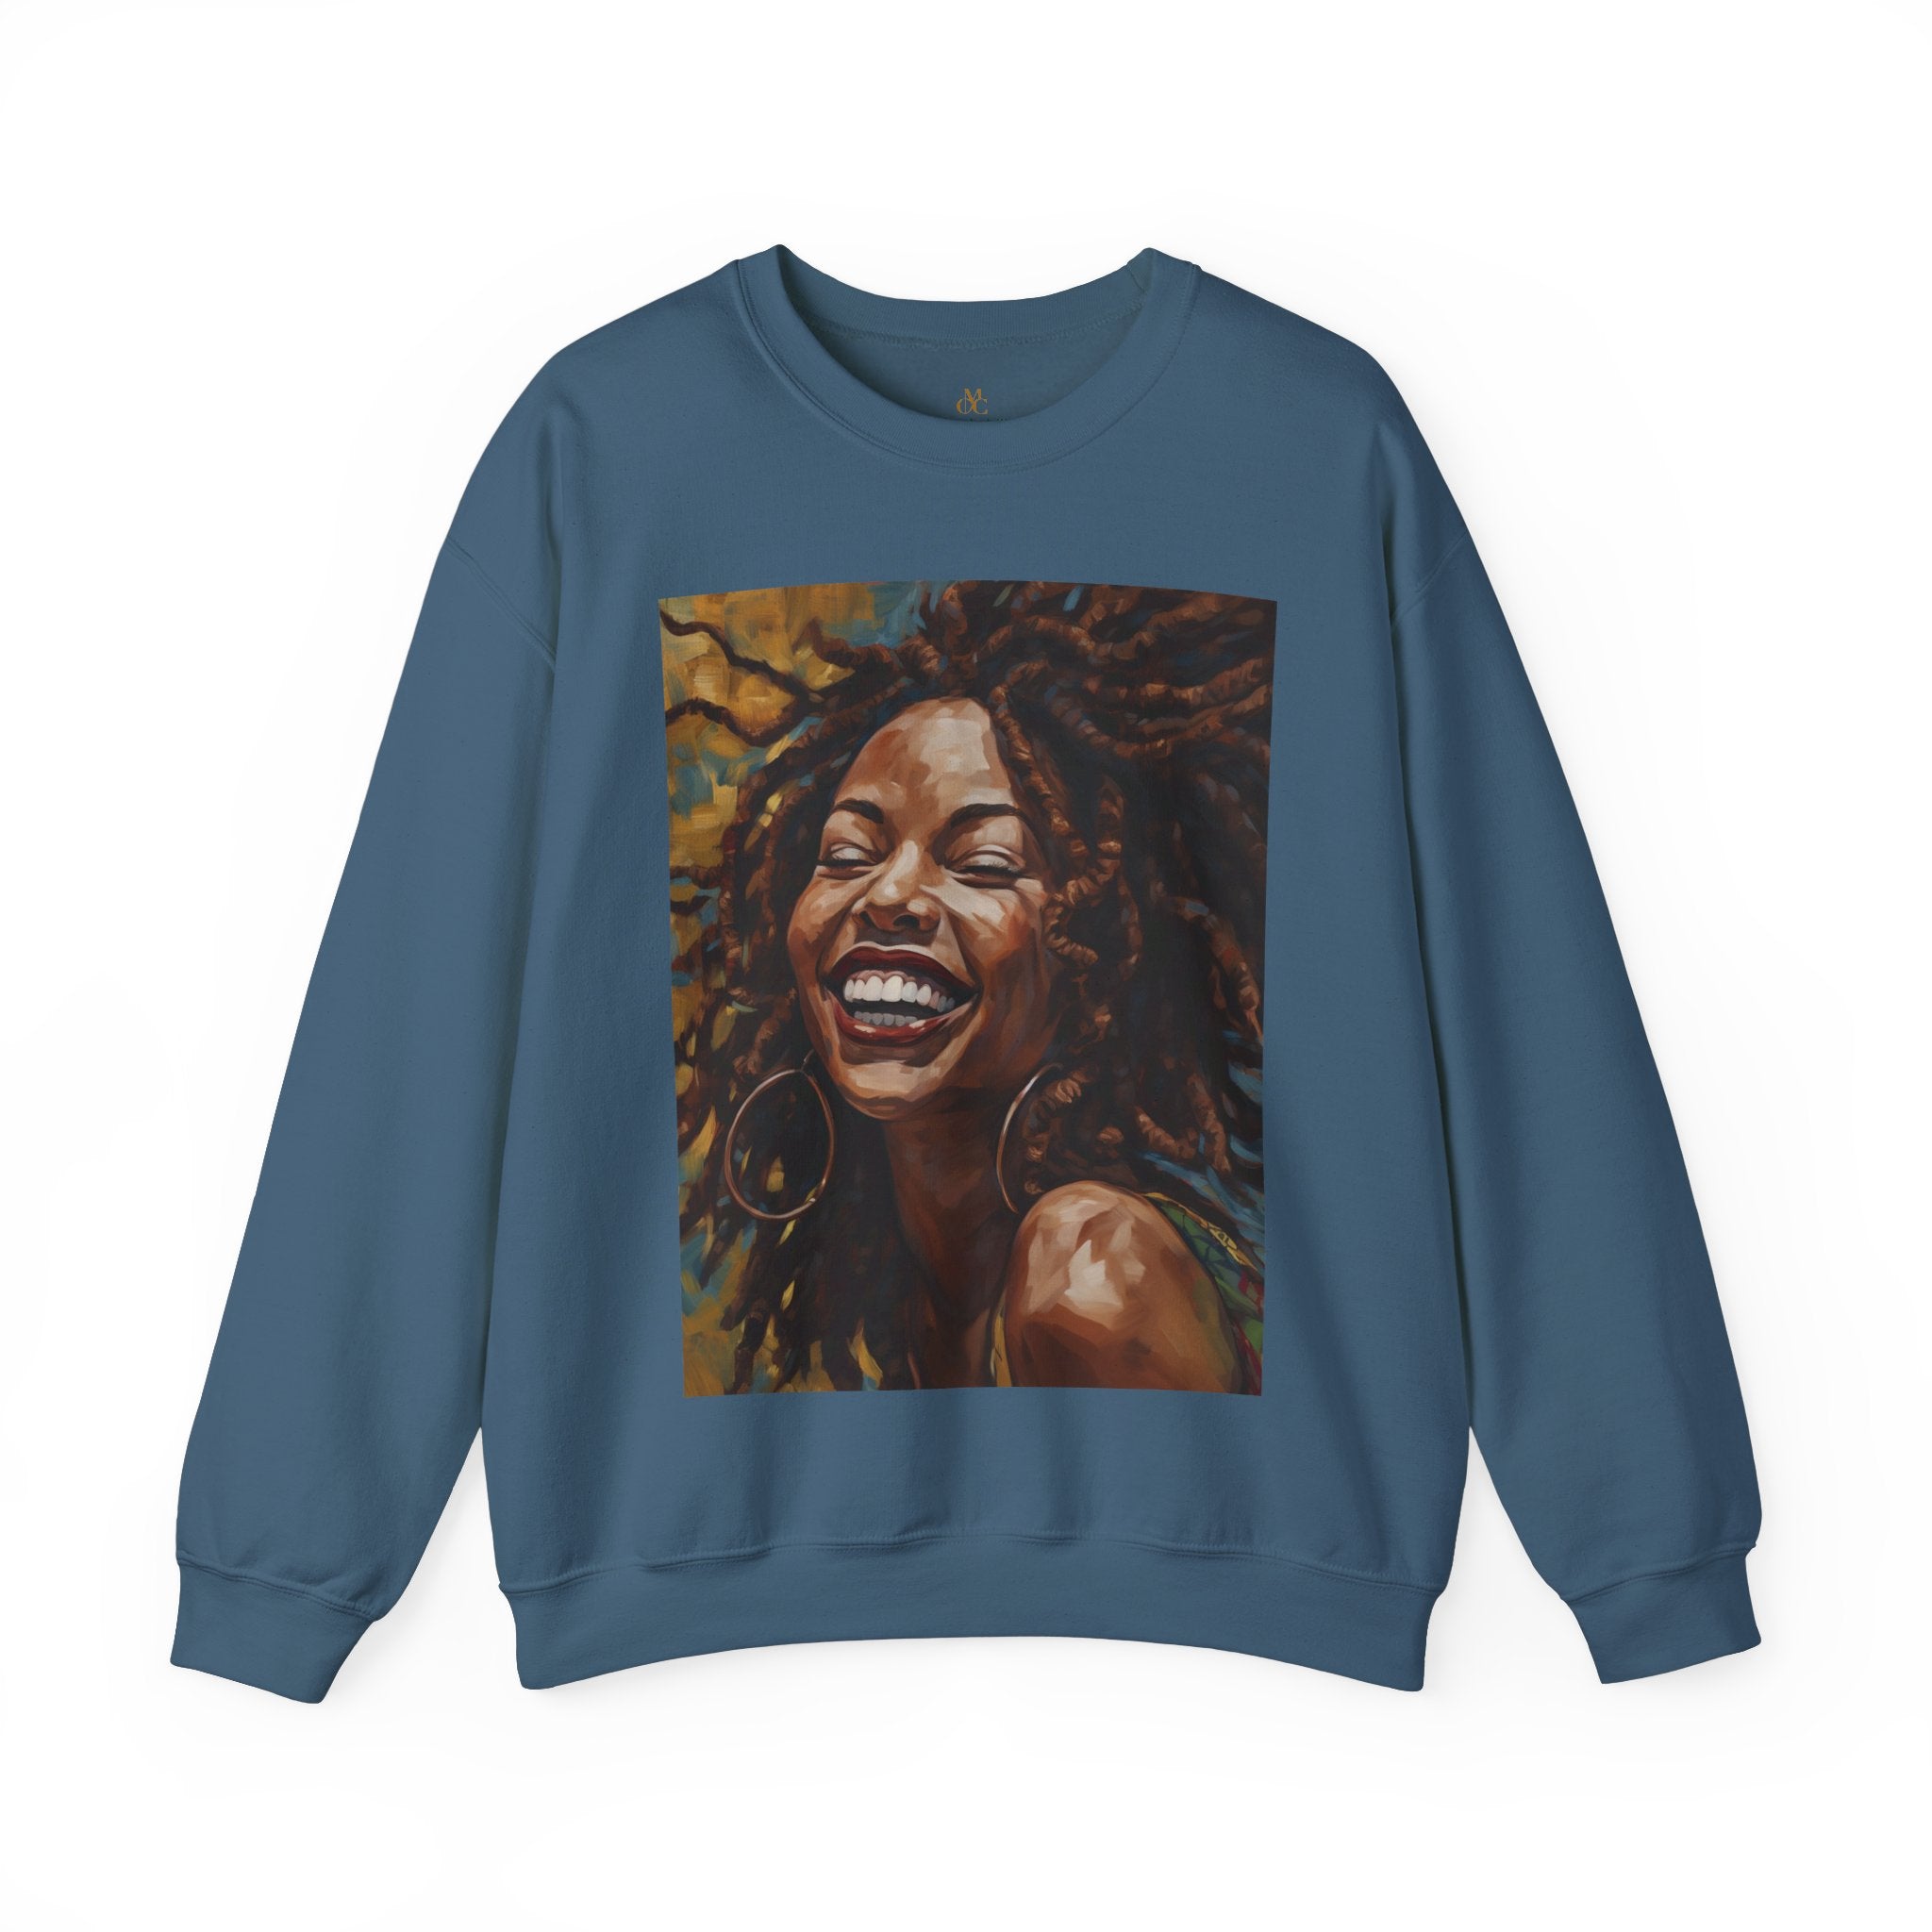 Afro Locs Girl sweatshirt in indigo blue.